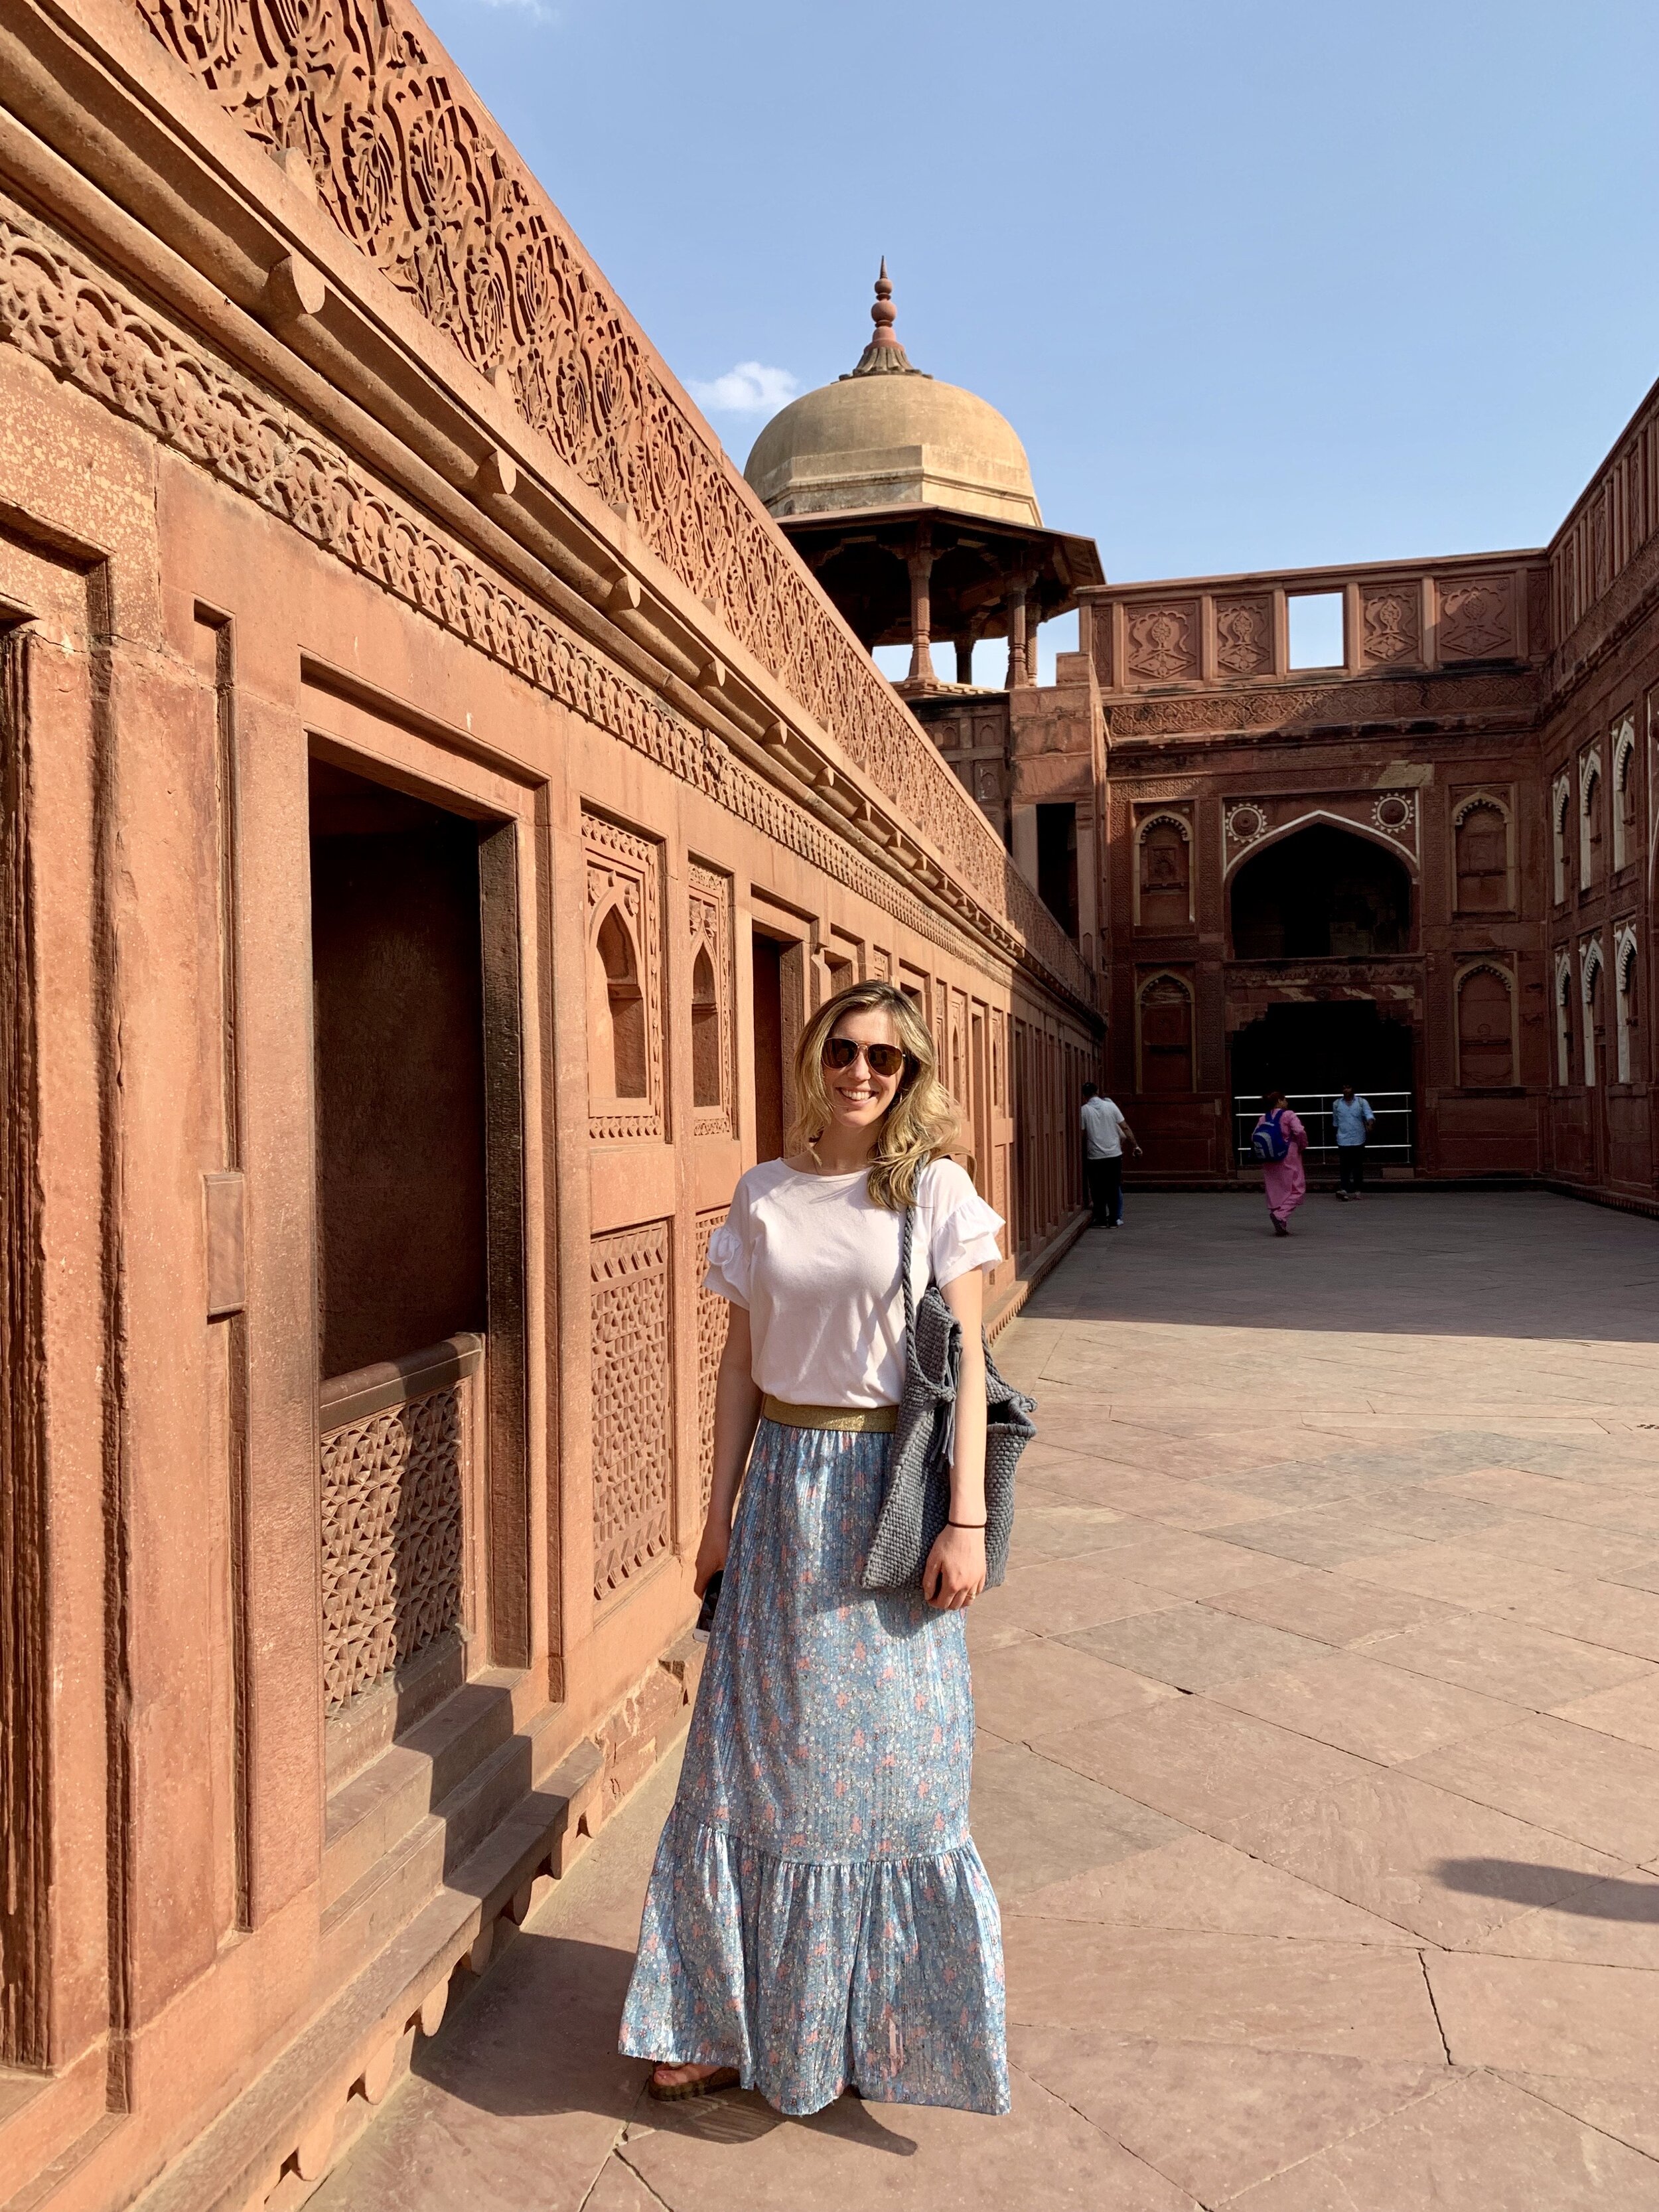 Agra Fort.jpeg